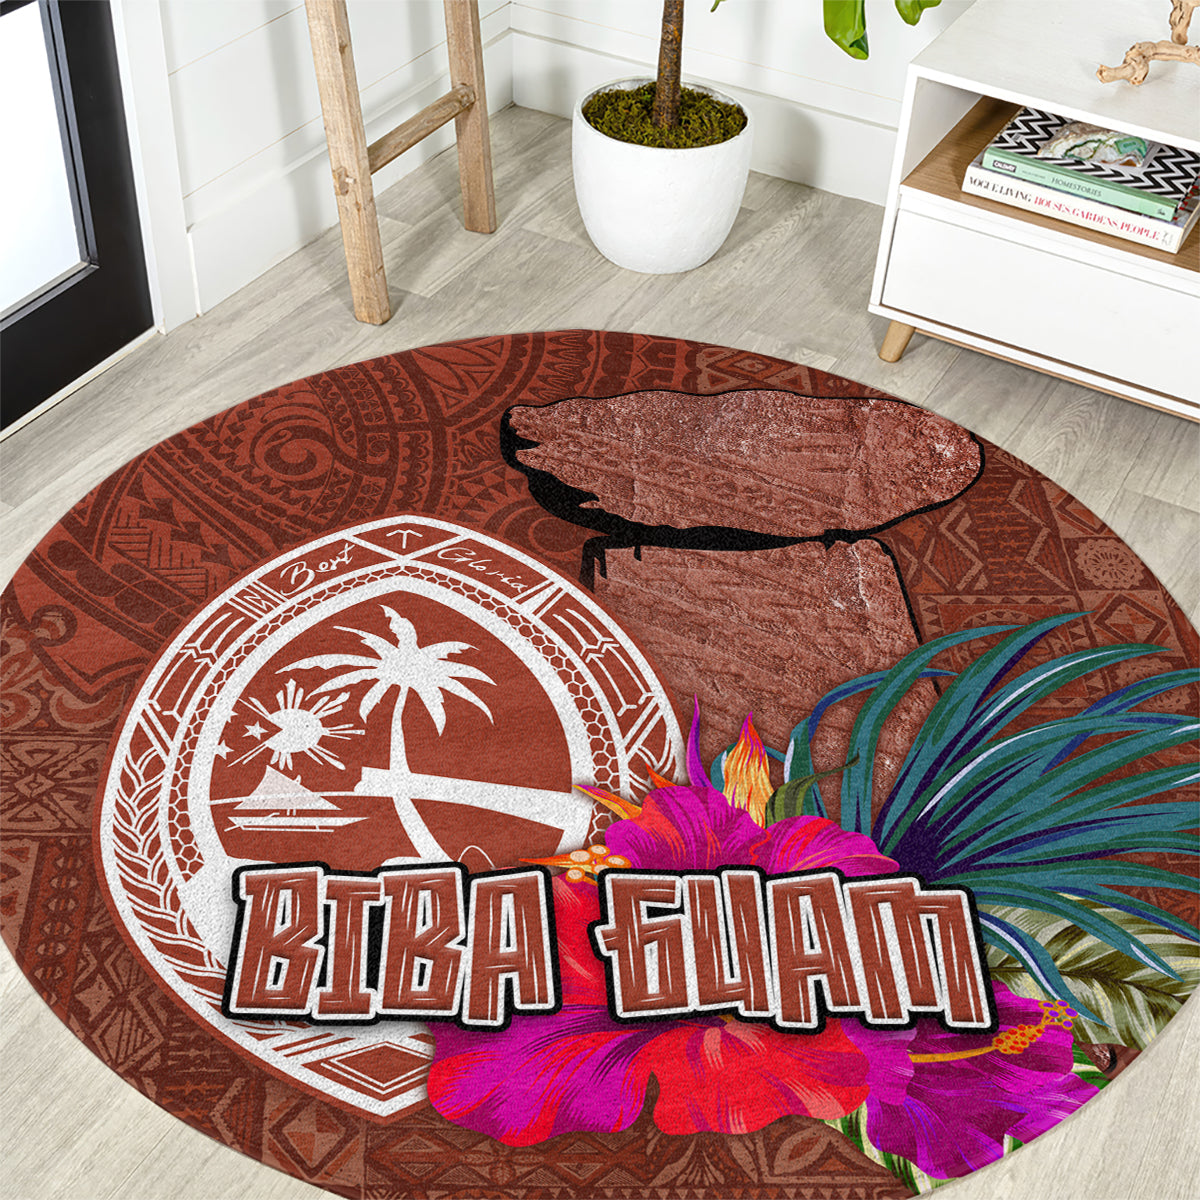 Chamorro Biba Guam Round Carpet Latte Stone Tribal and Hibiscus Flower Tapa Pattern